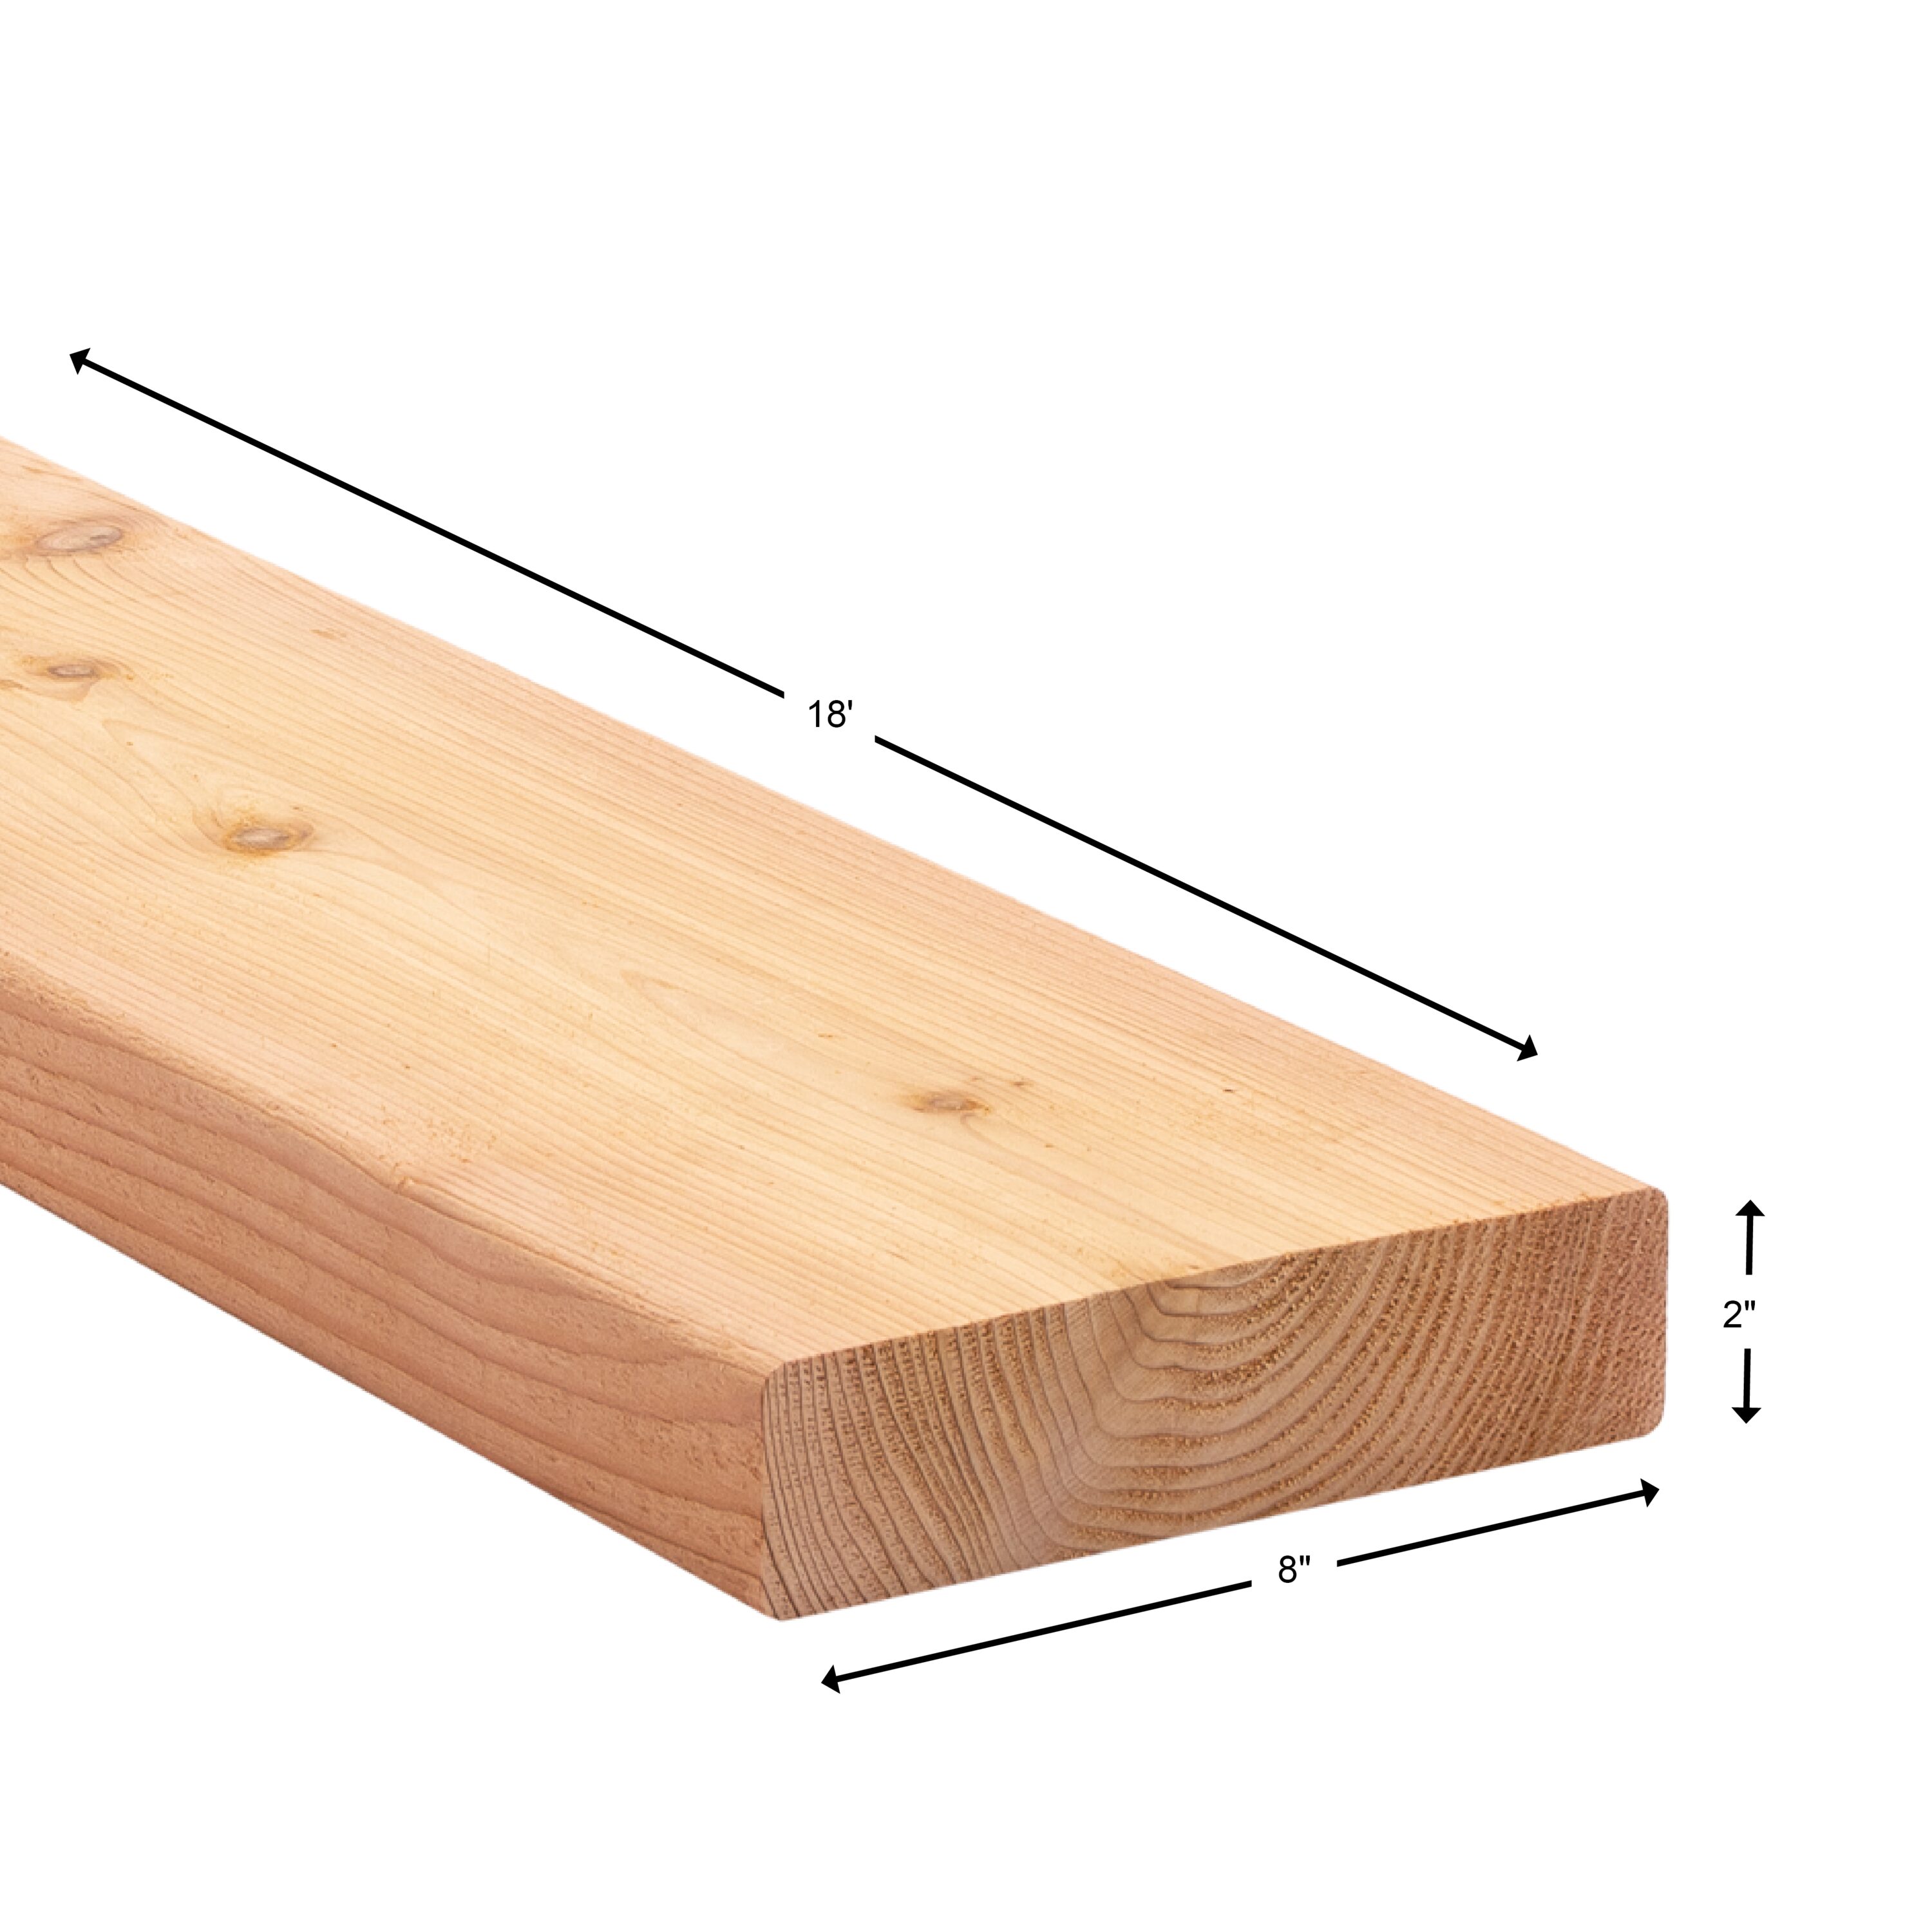 2in x 8in x 18ft Cedar Green Lumber in the Dimensional Lumber